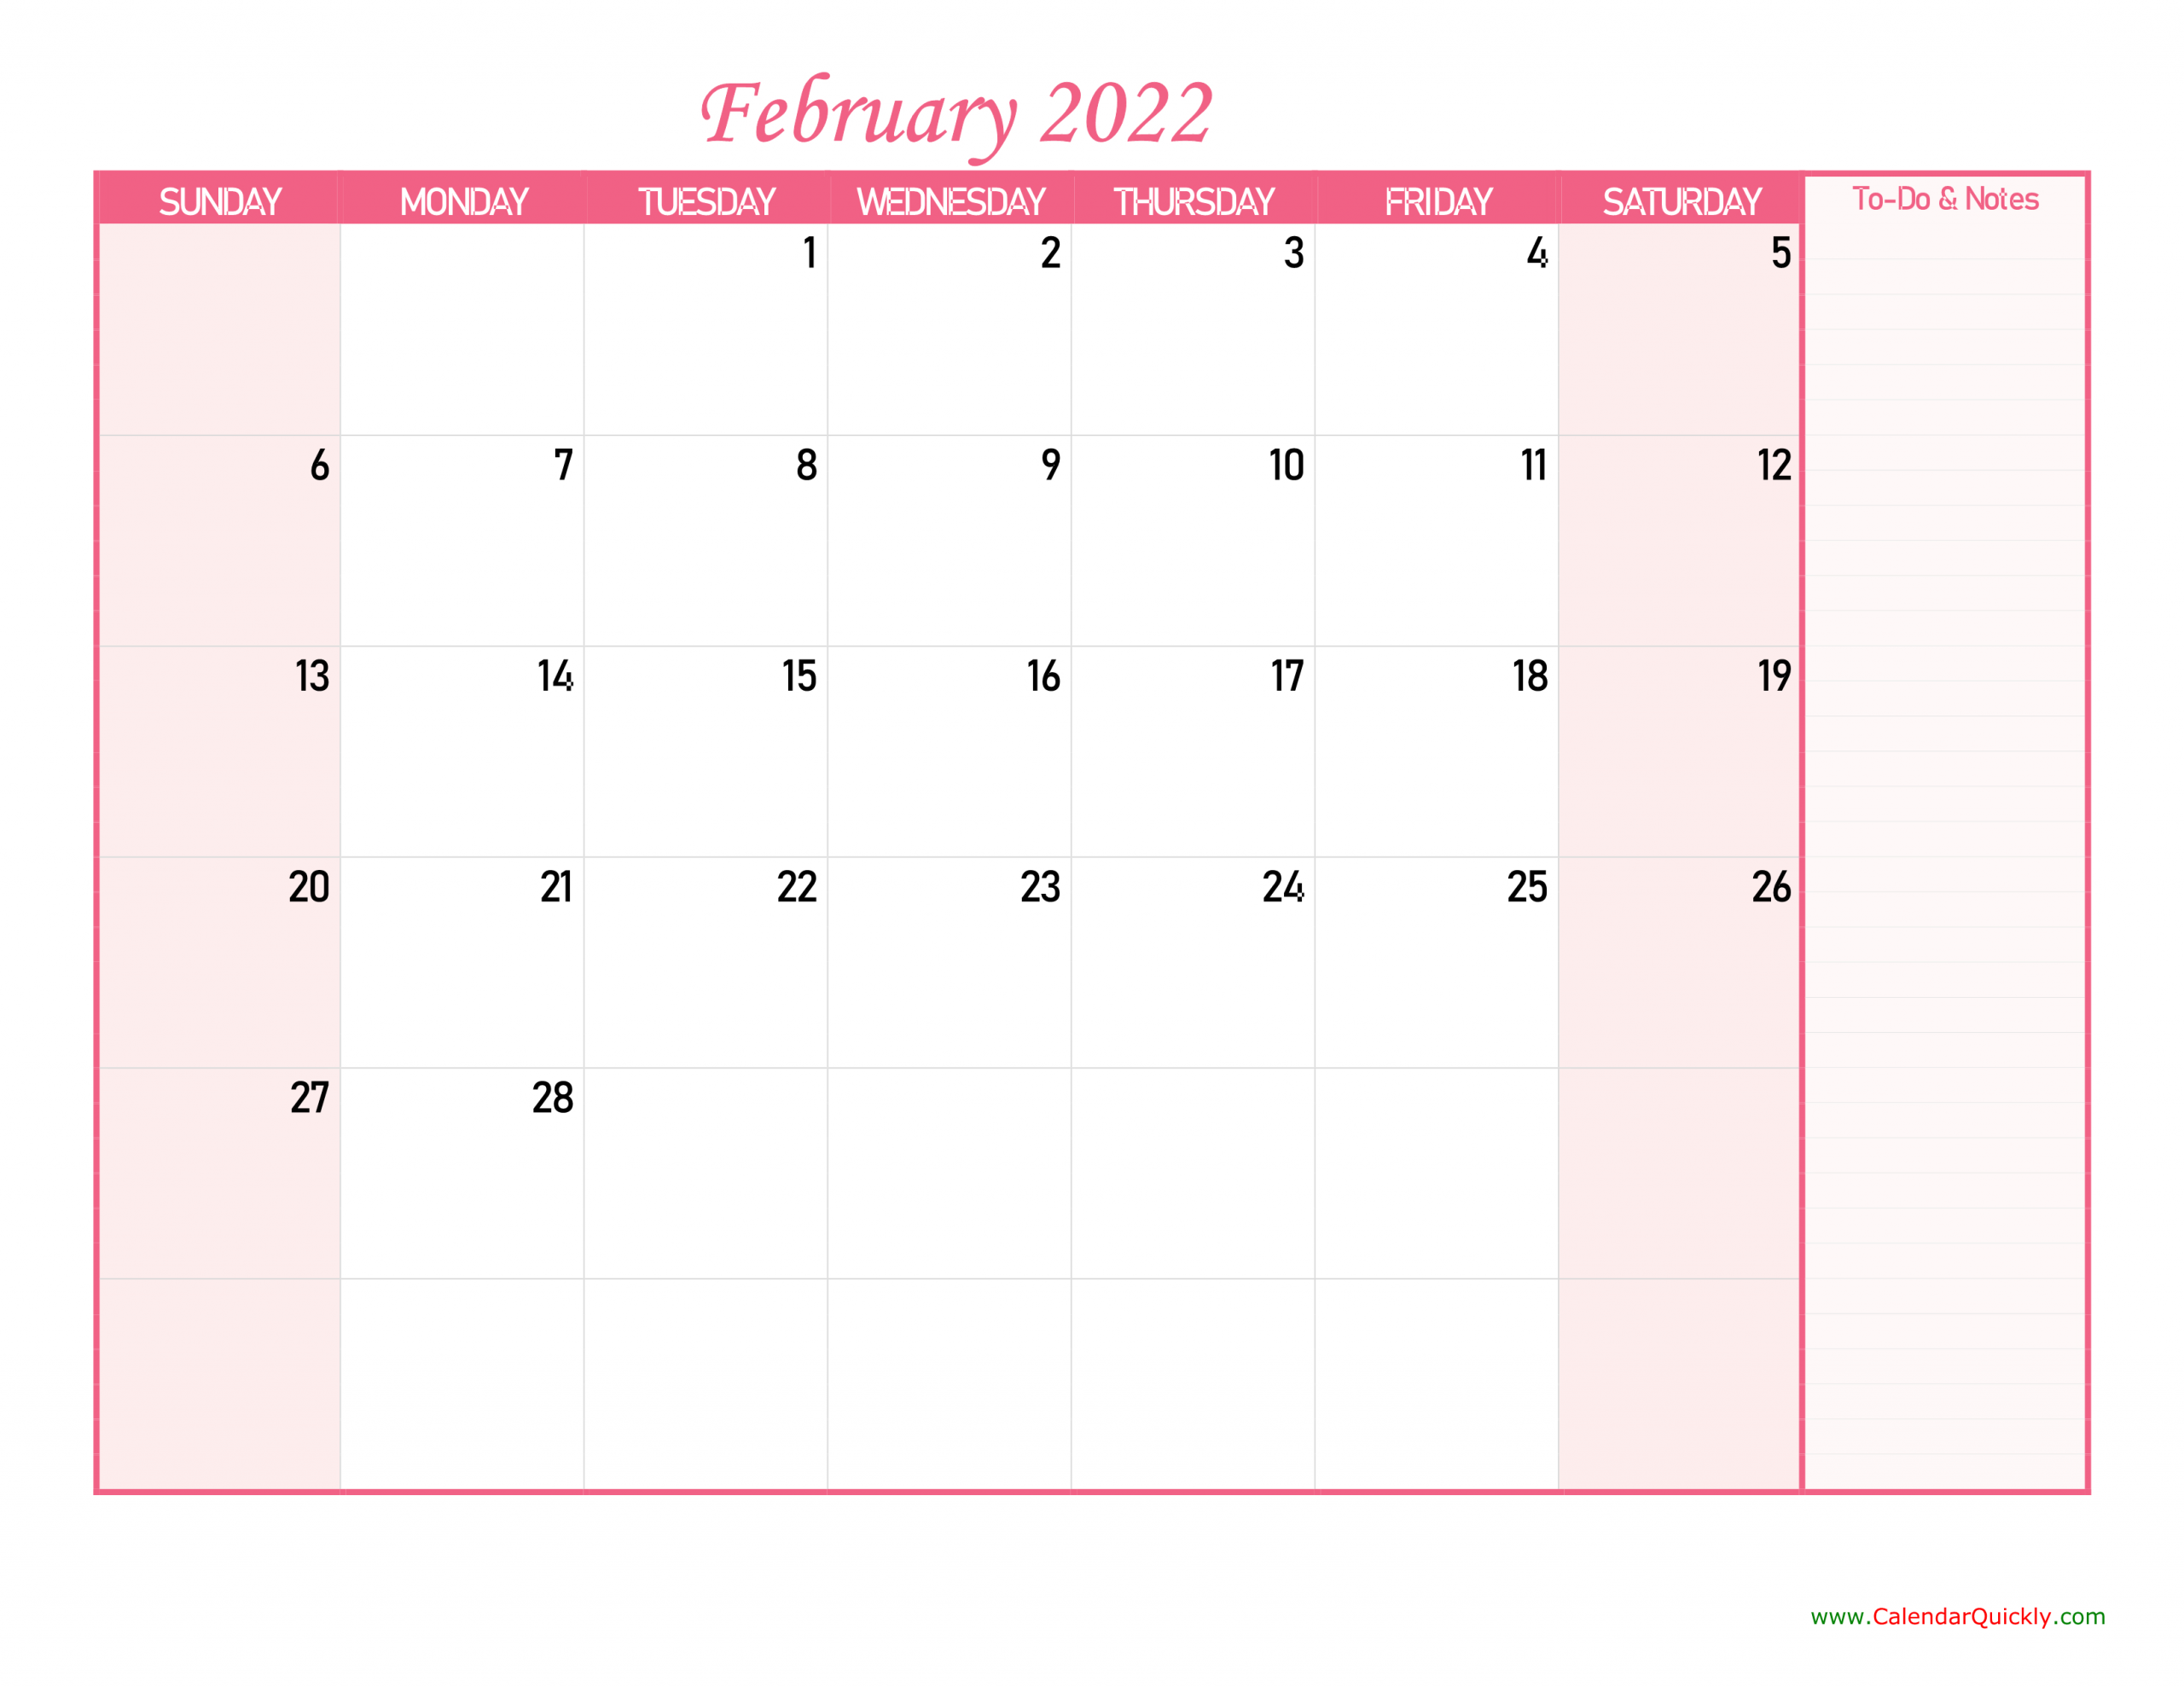 February Calendar 2022 With Notes Calendar Quickly